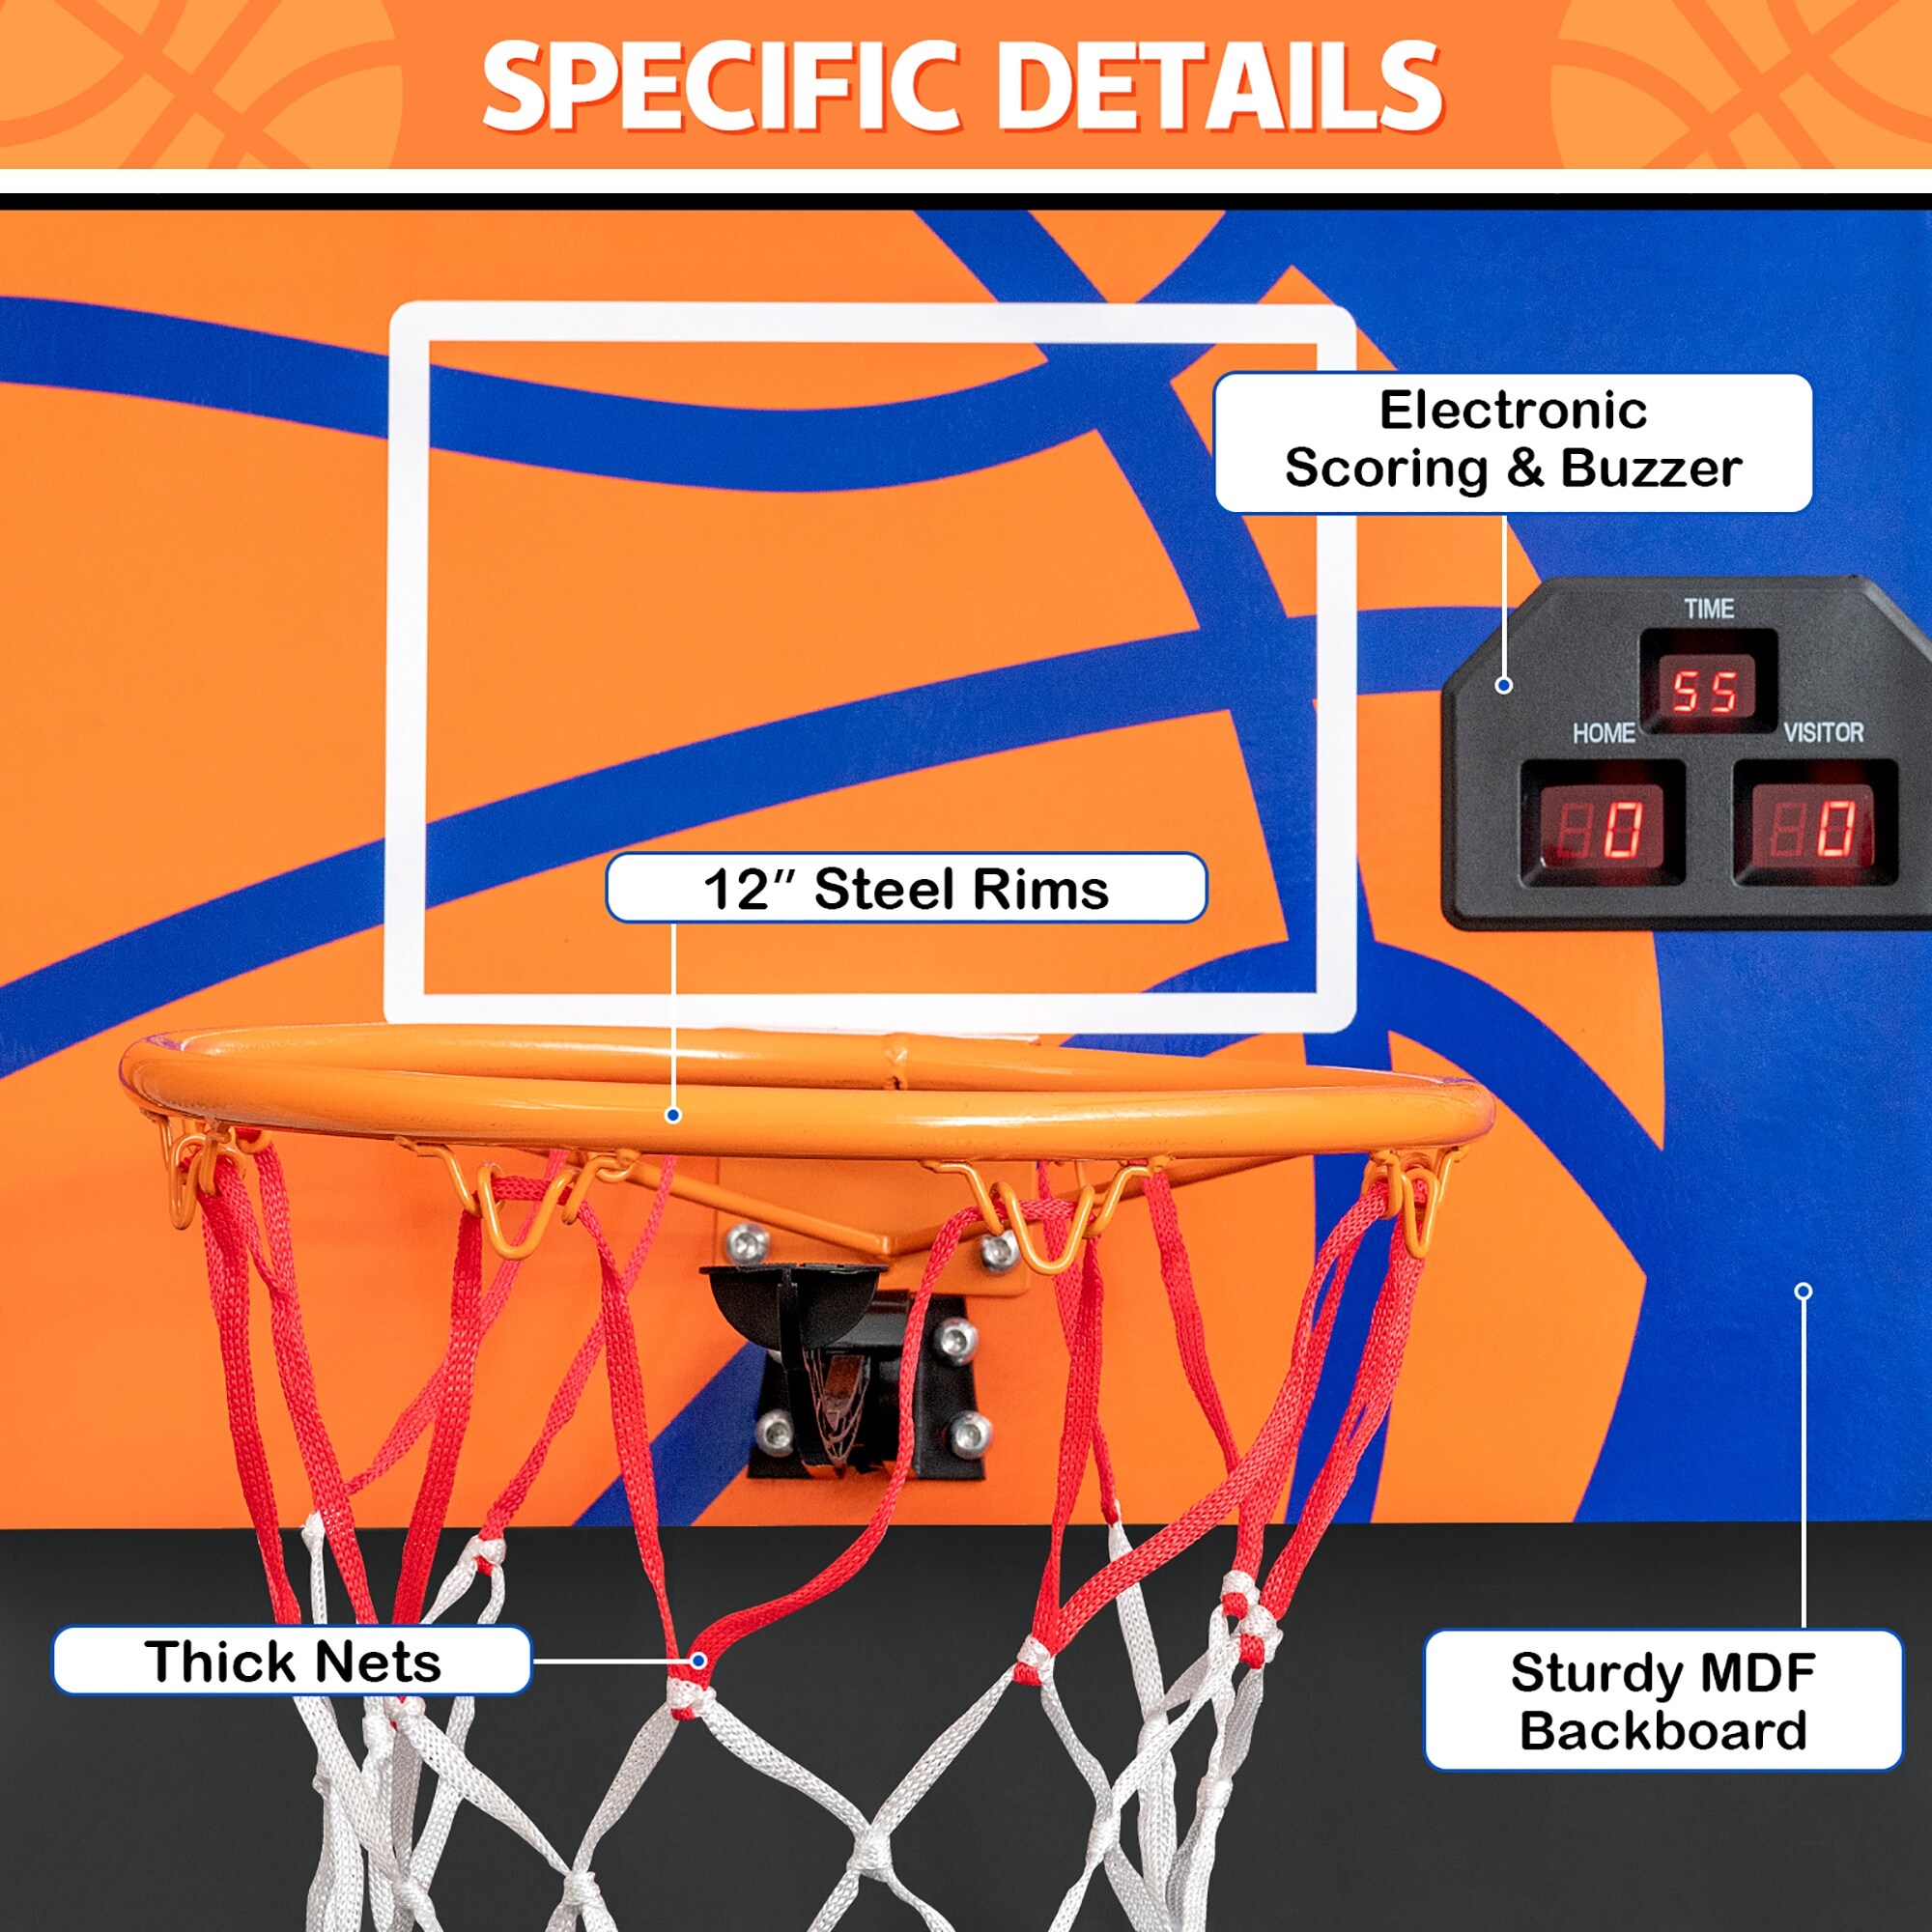 Deco Gear Arcade Basketball Game, Indoor 1-4 Player, LED Scoreboard, 8 Game Modes, 5 Balls